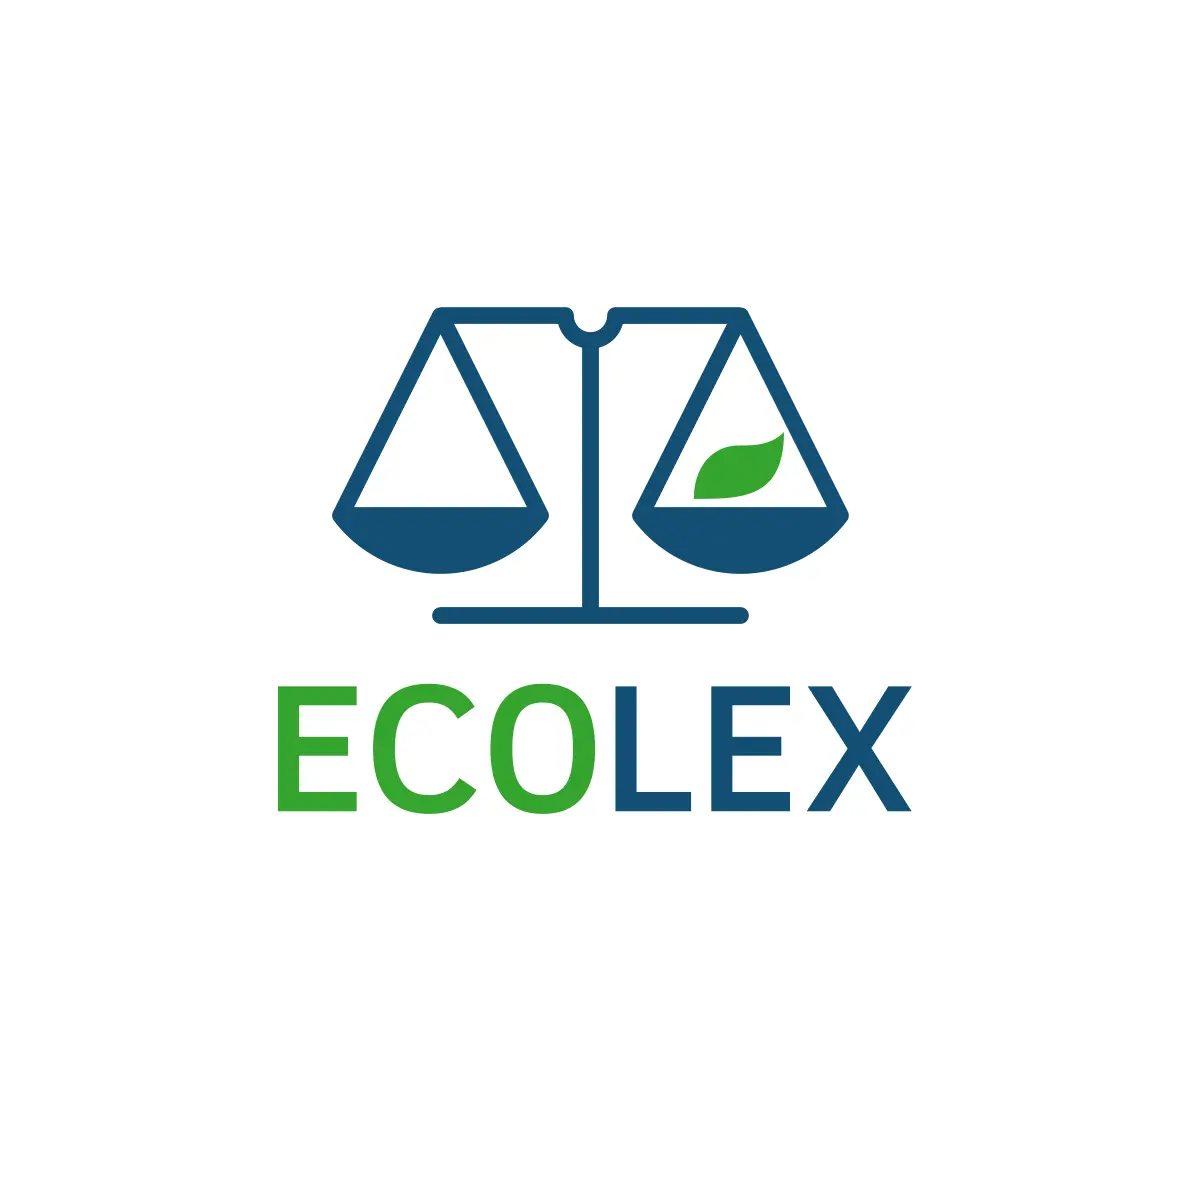 ECOLEX - the gateway to environmental law